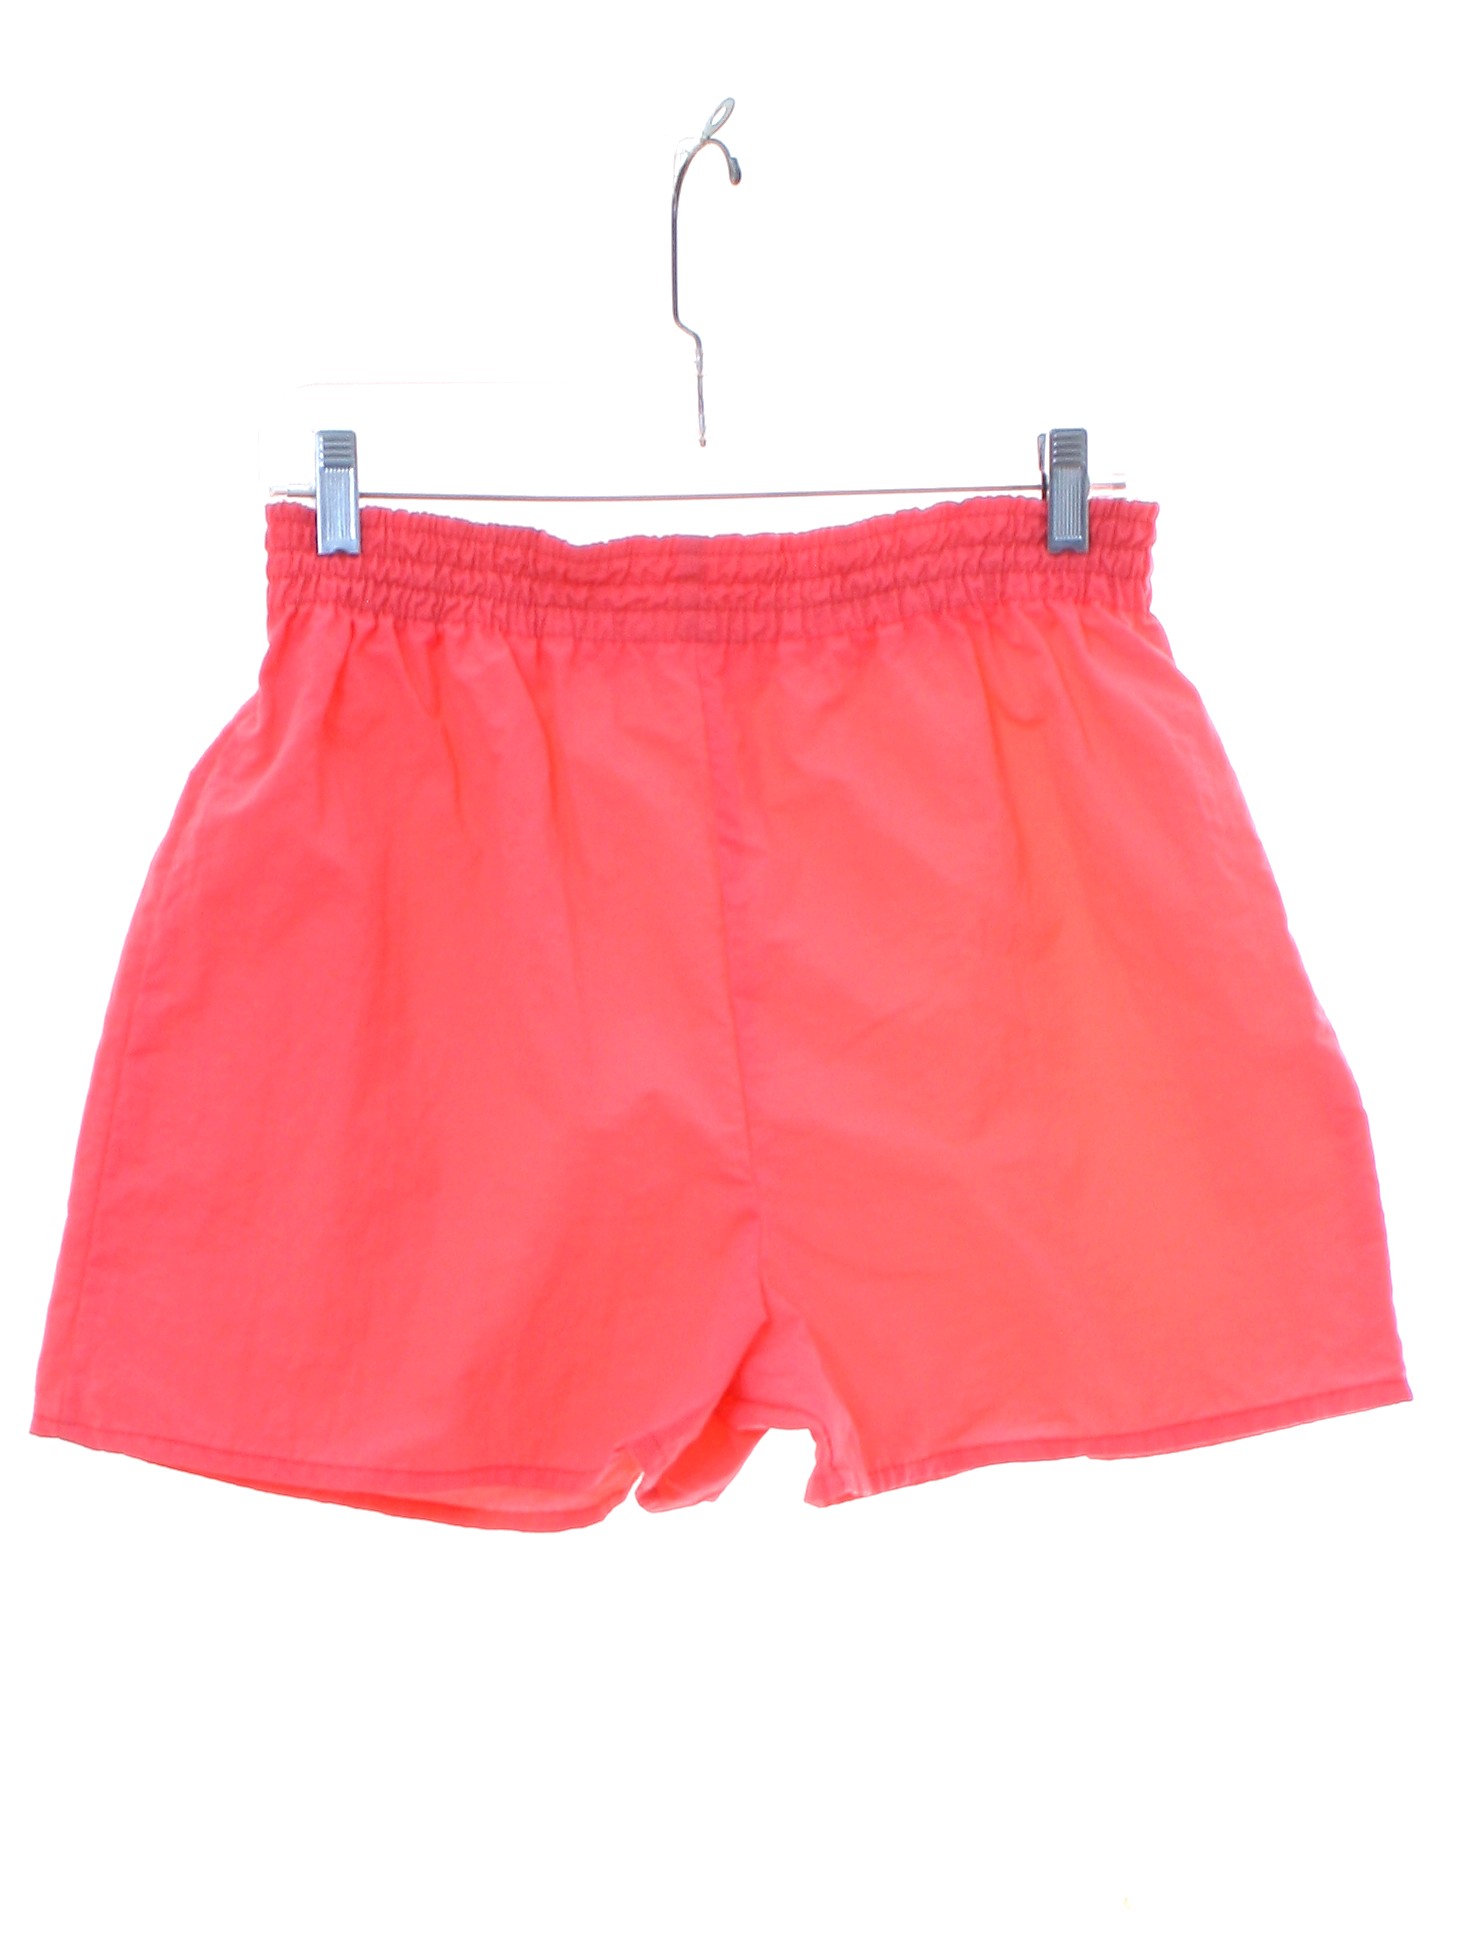 1980's Shorts (Missing Label): 80s -Missing Label- Unisex neon orange ...